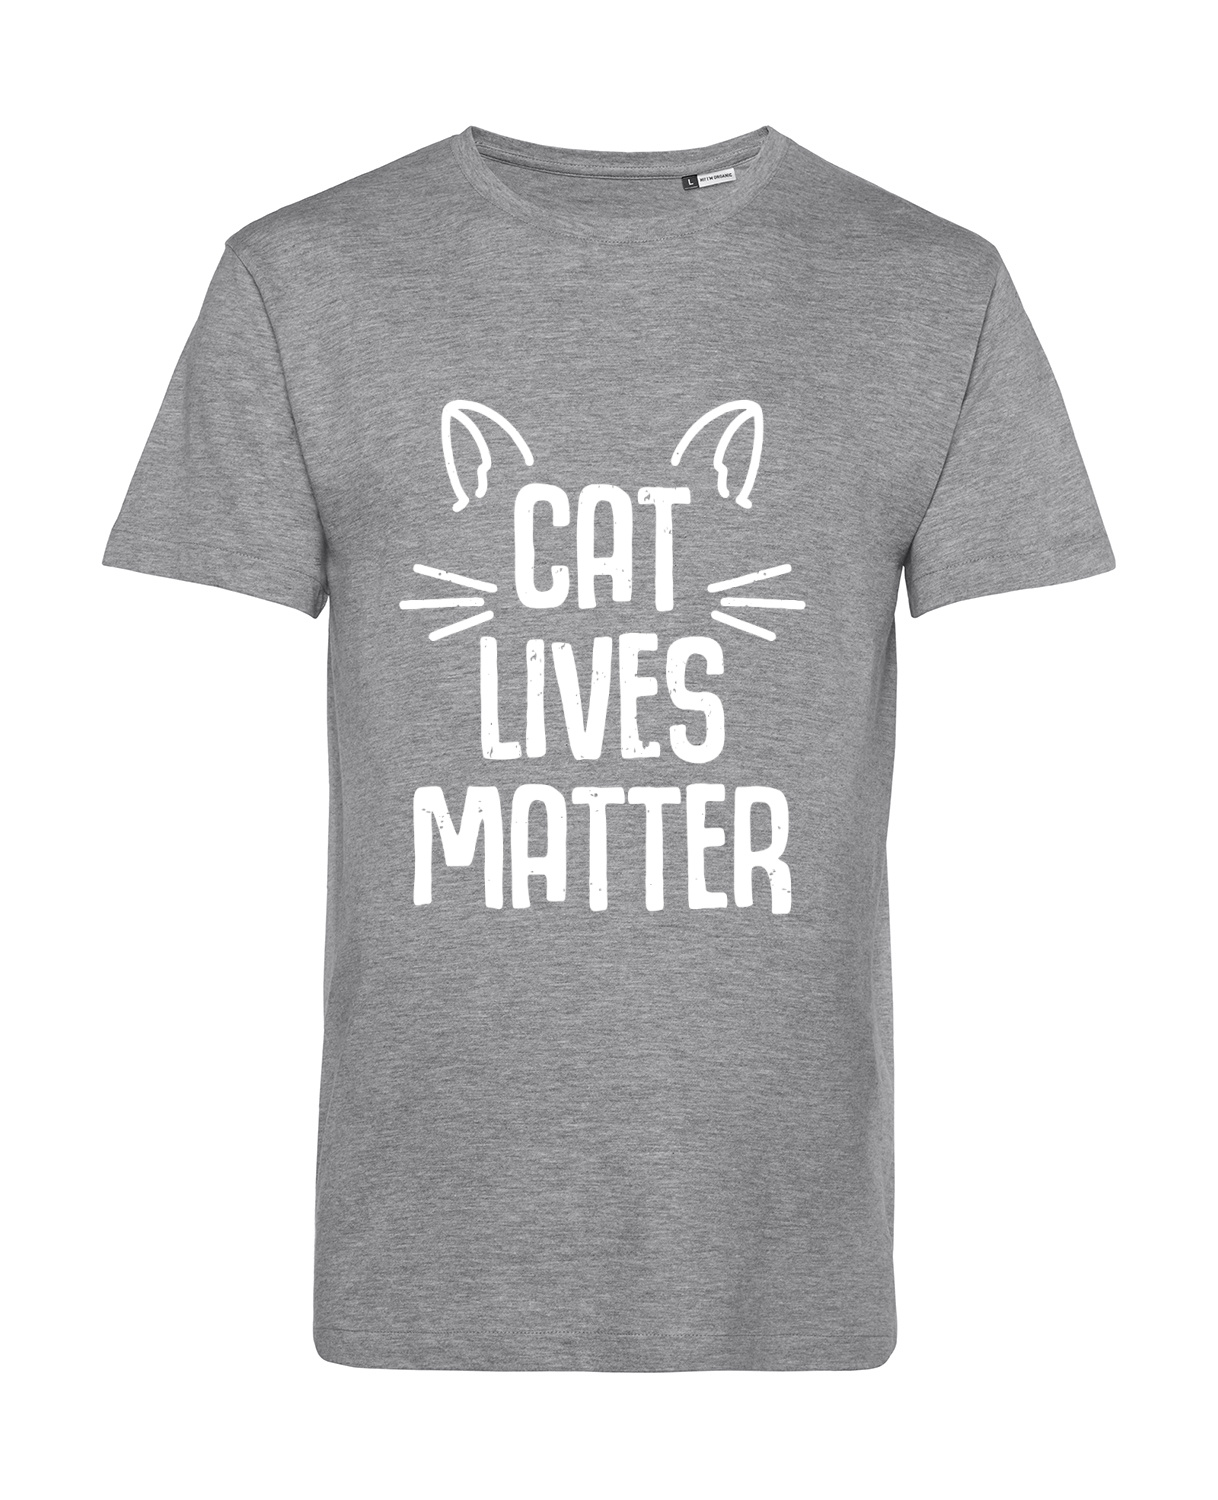 Nachhaltiges T-Shirt Herren Katzen - Cat Lives matter